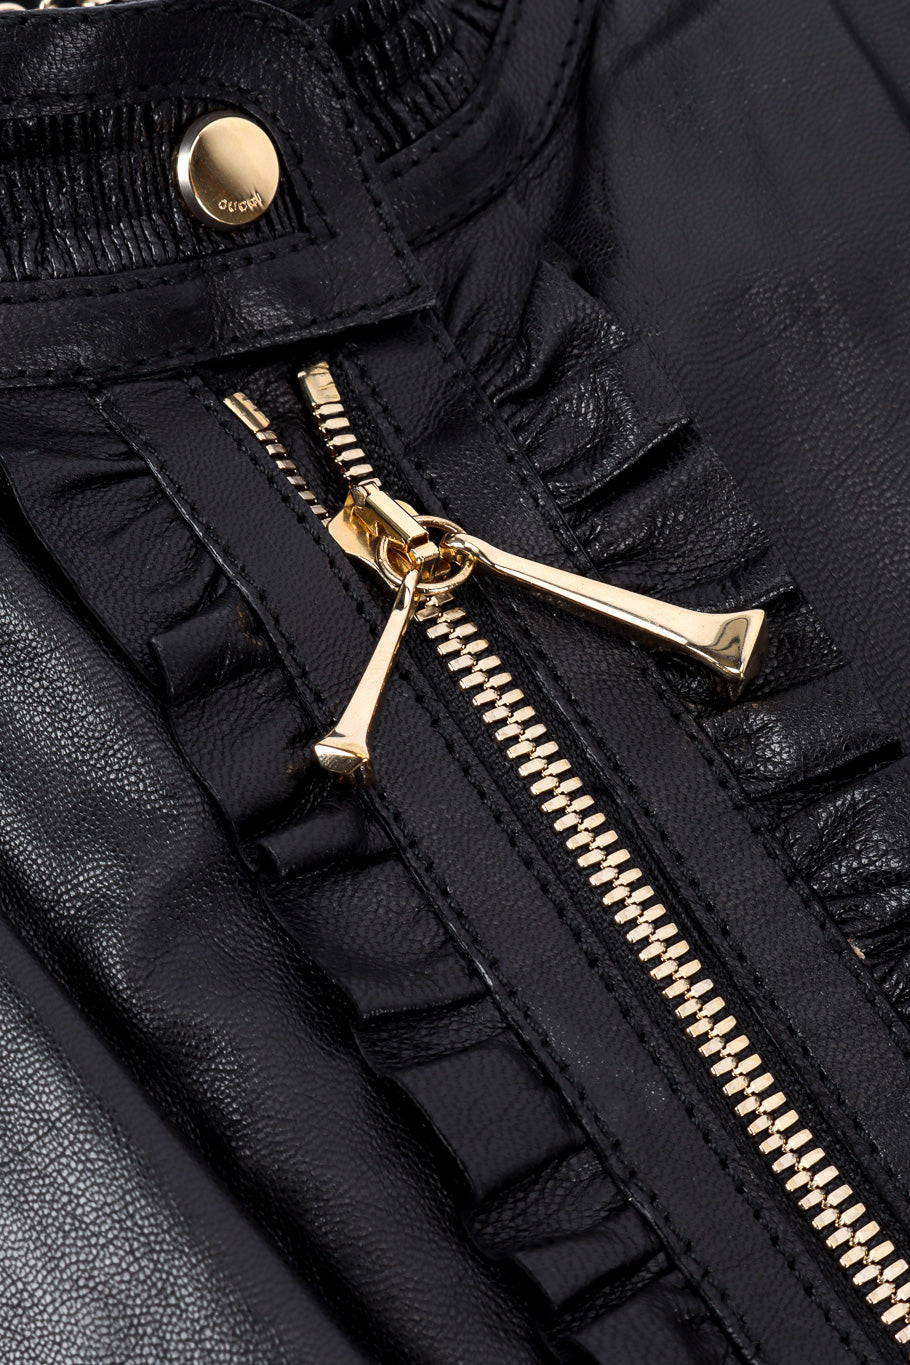 Gucci Leather Ruffle Top zipper closeup @Recessla